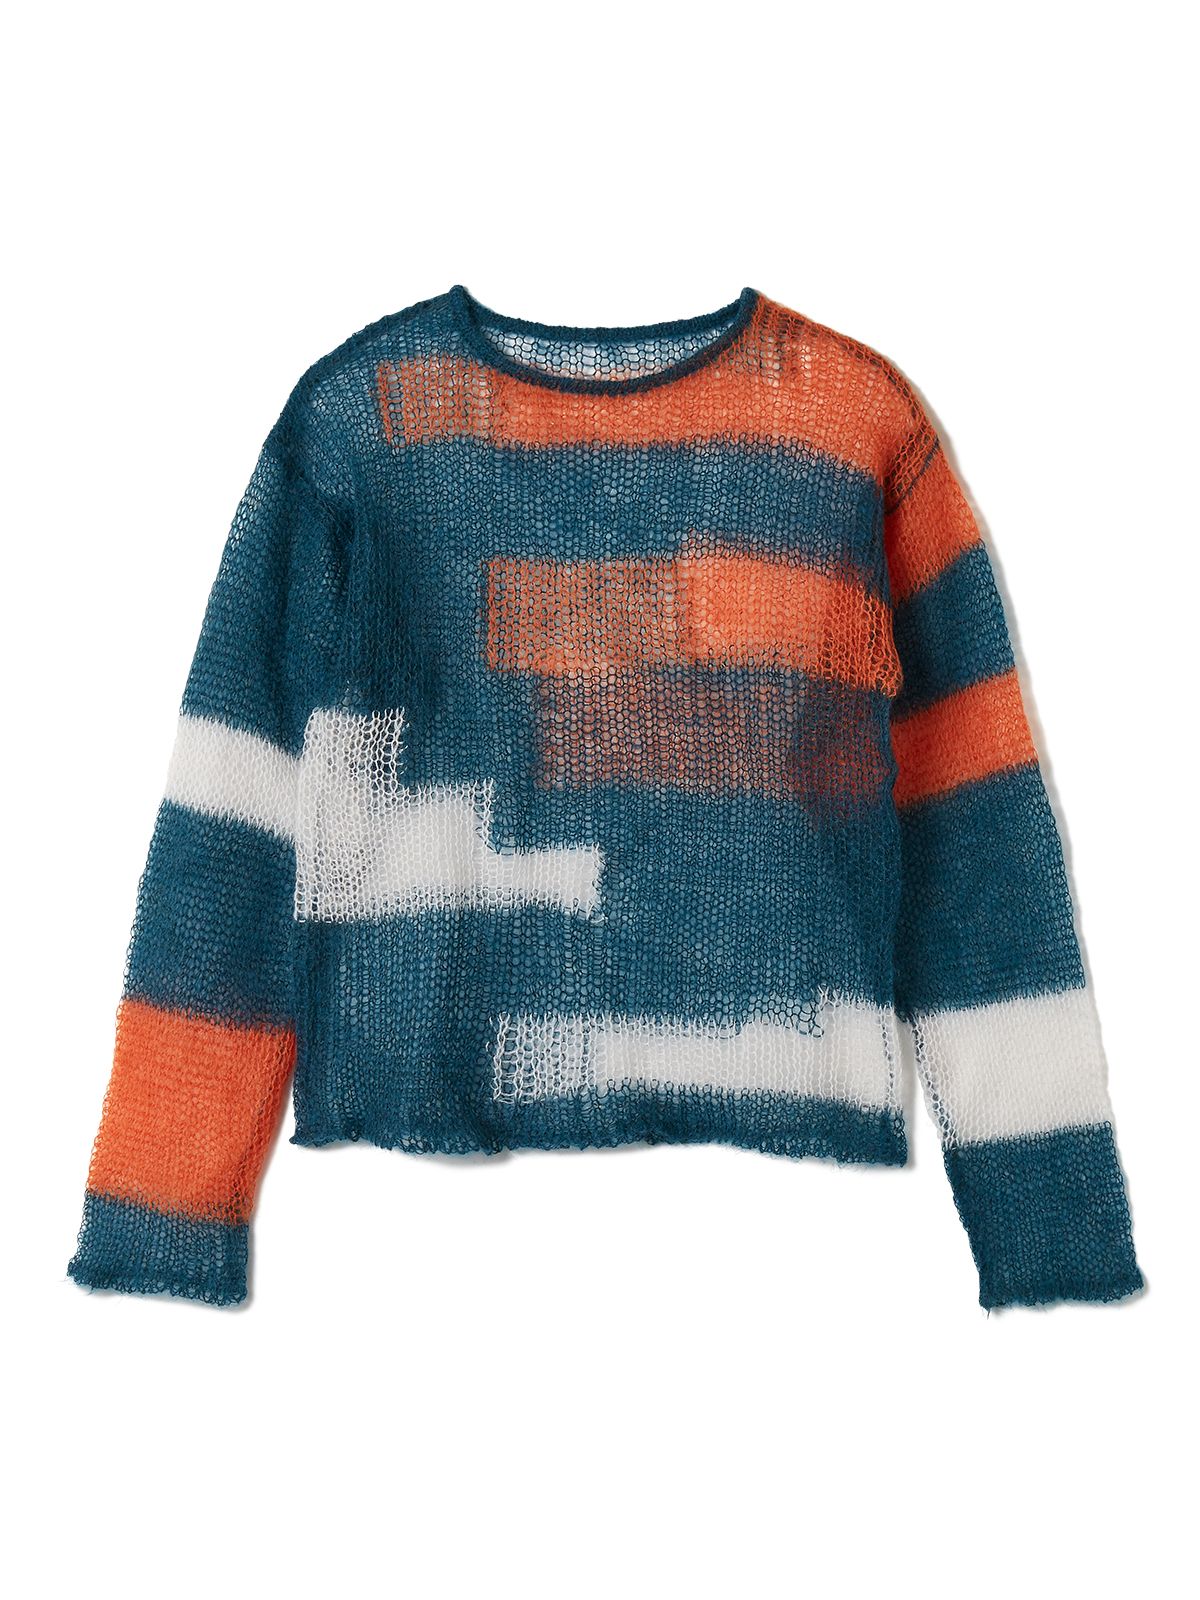 patchwork knit tops / blue